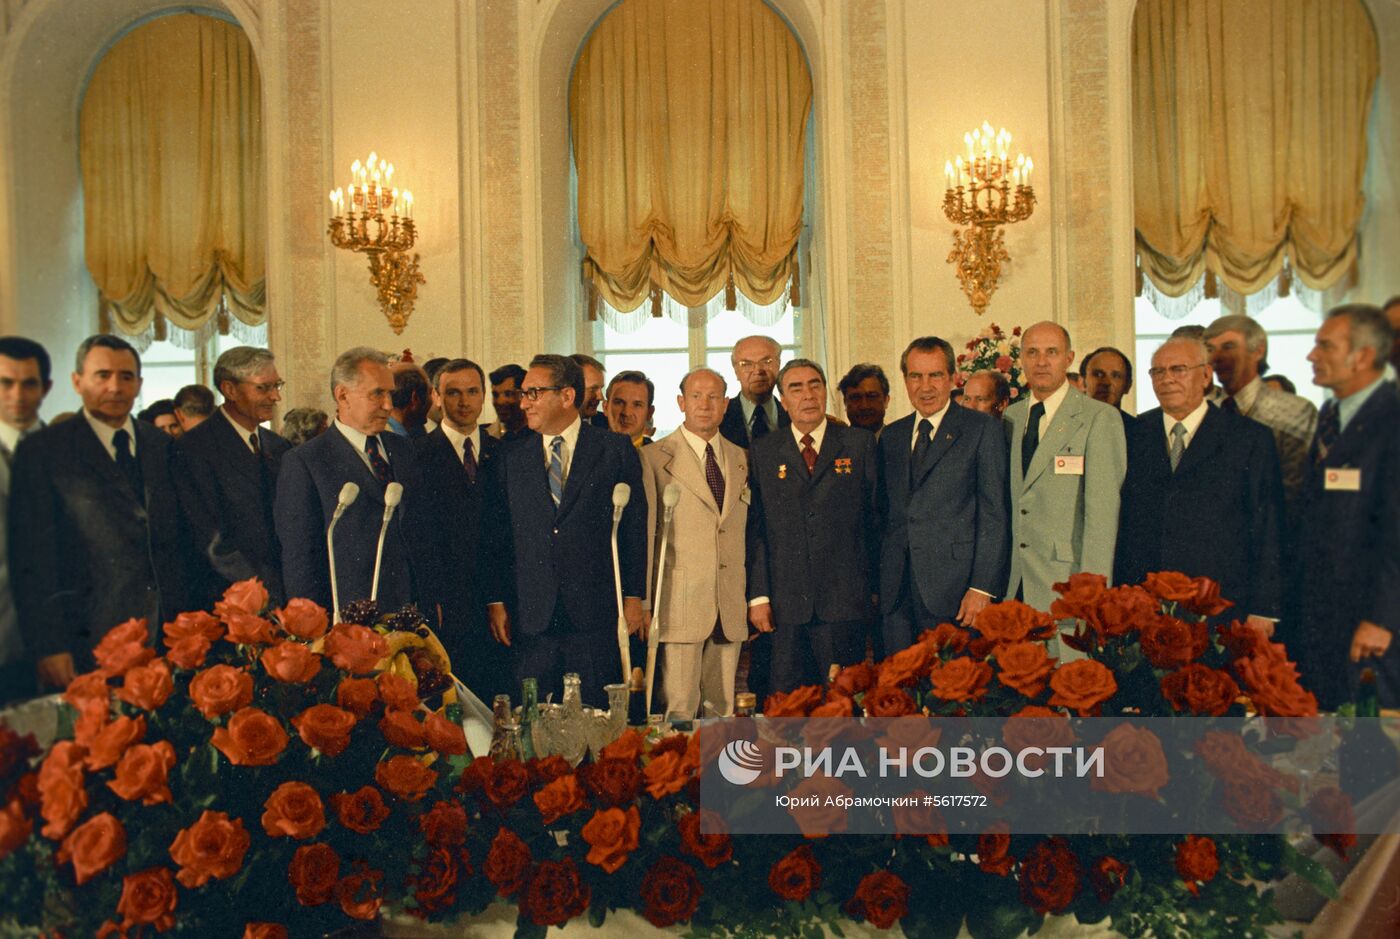 Визит Президента США Р. Никсона в СССР